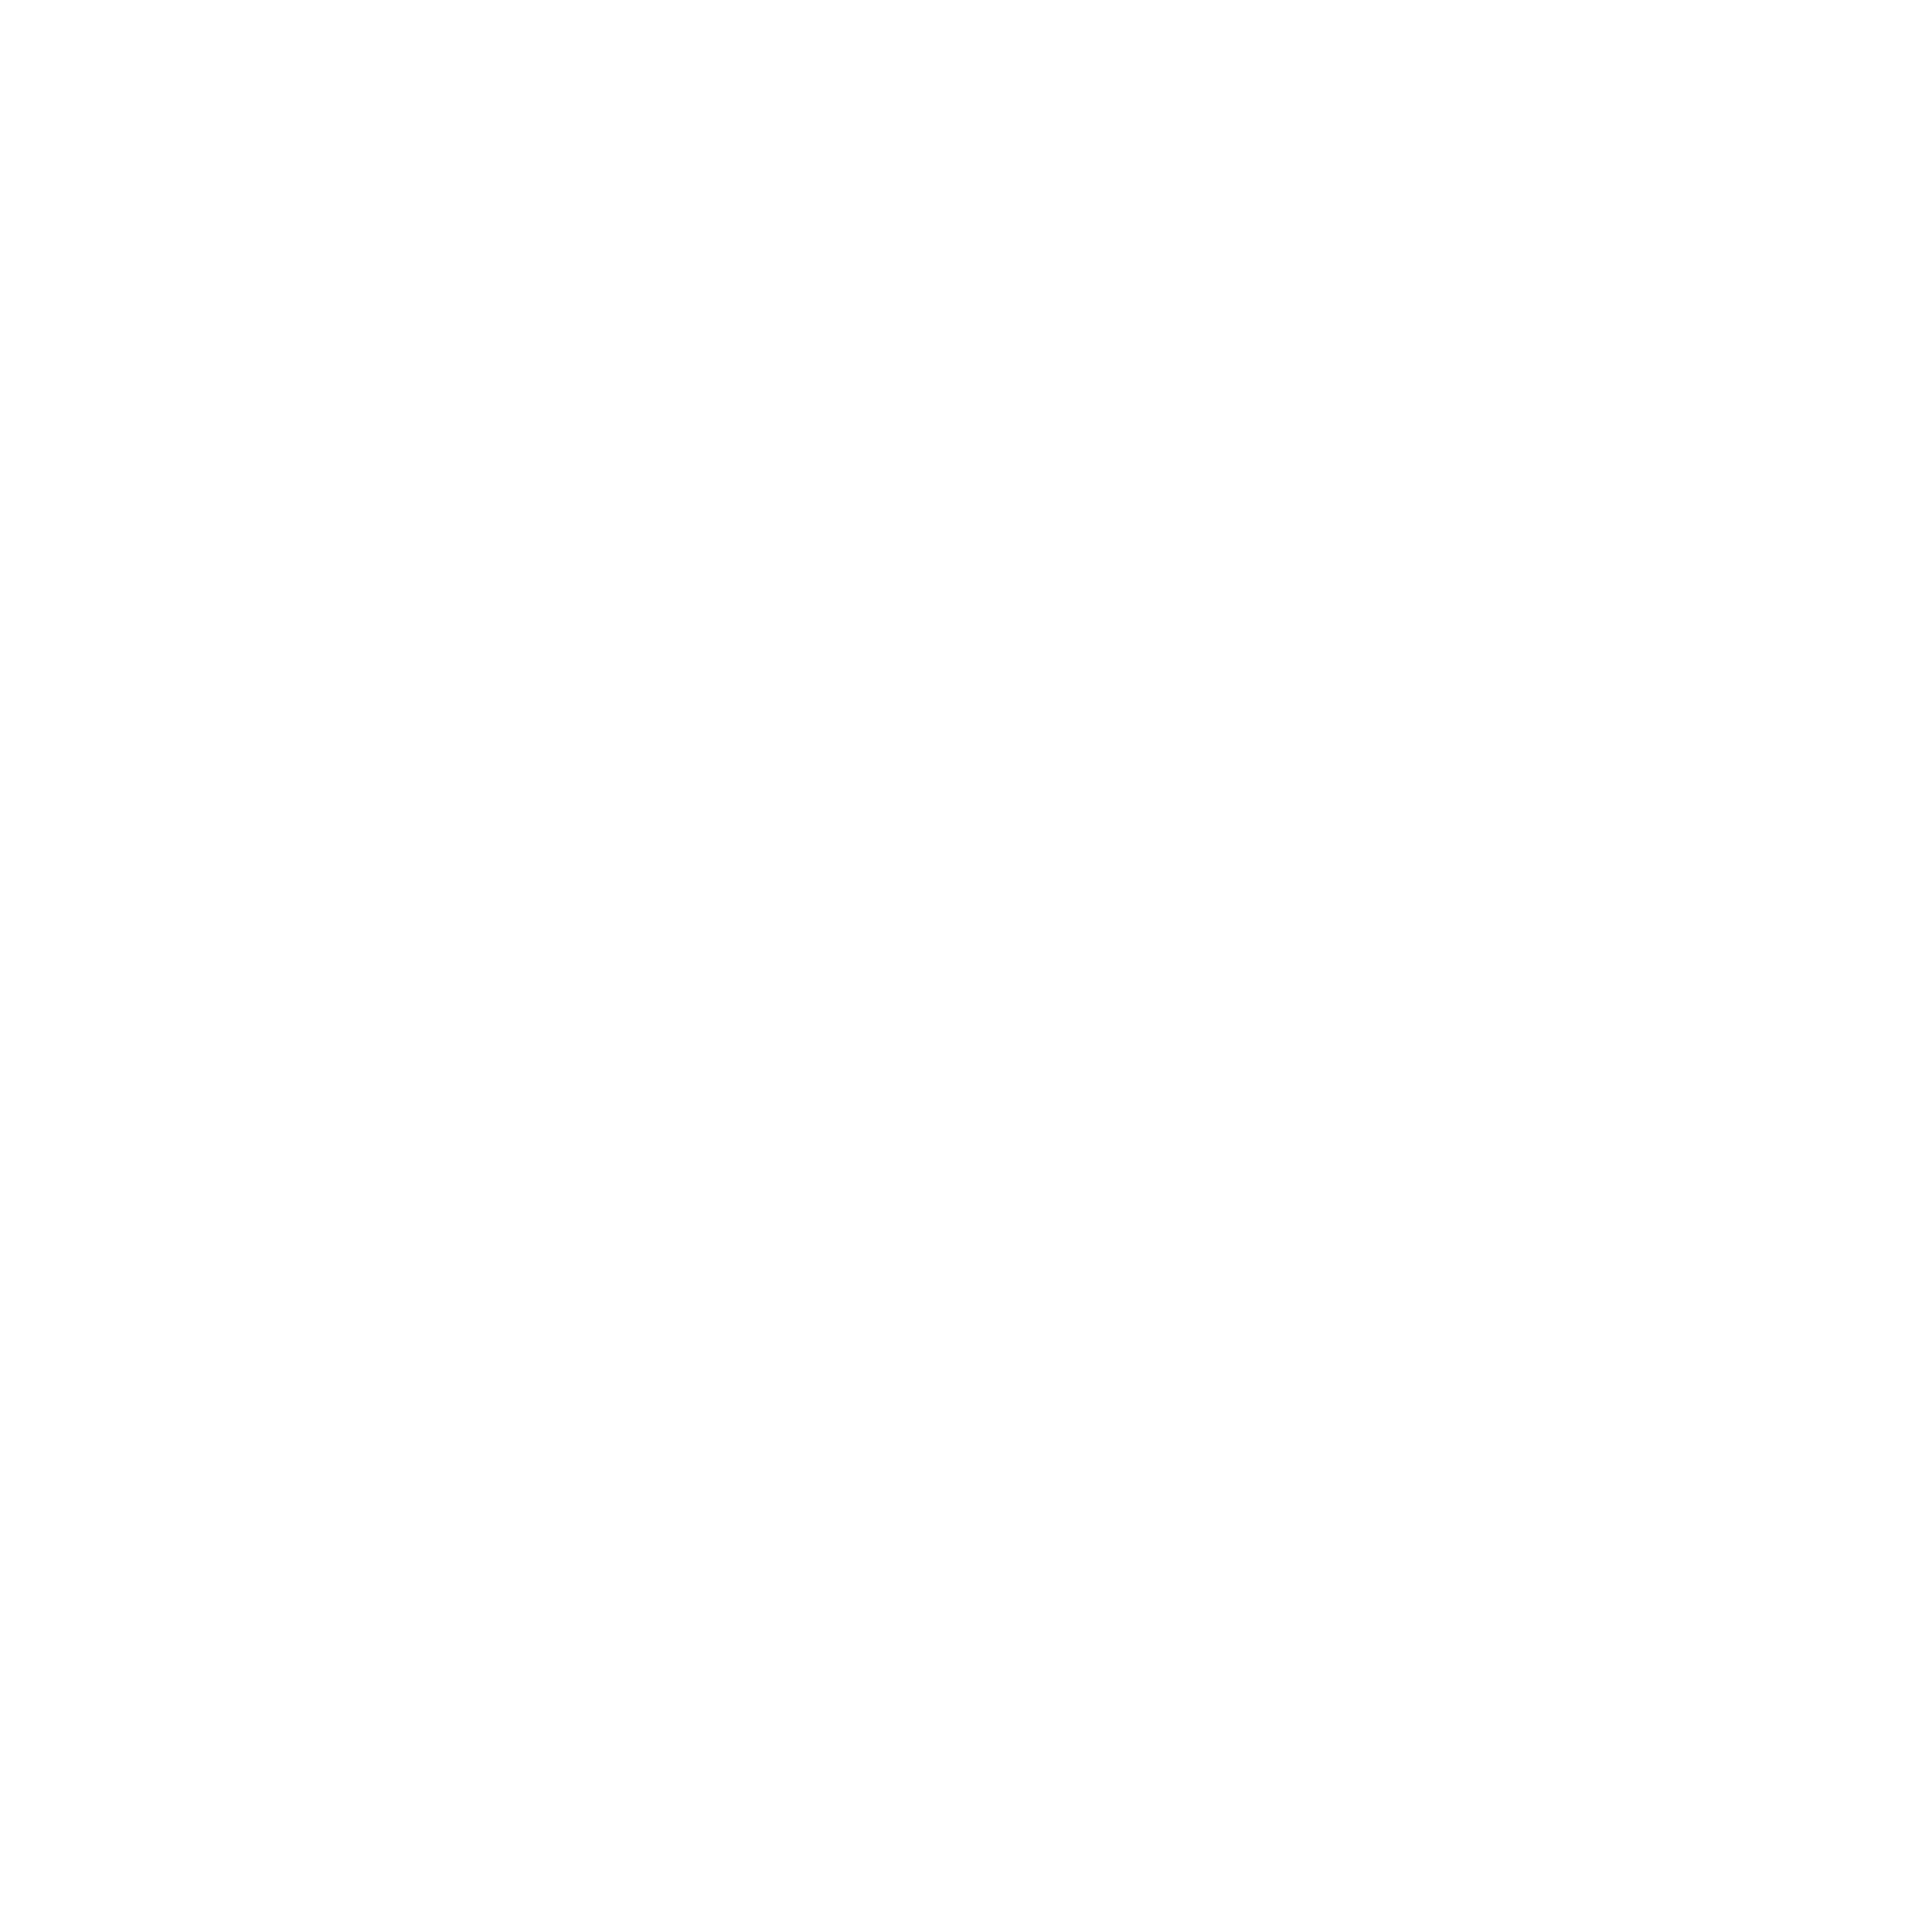 Aqualex